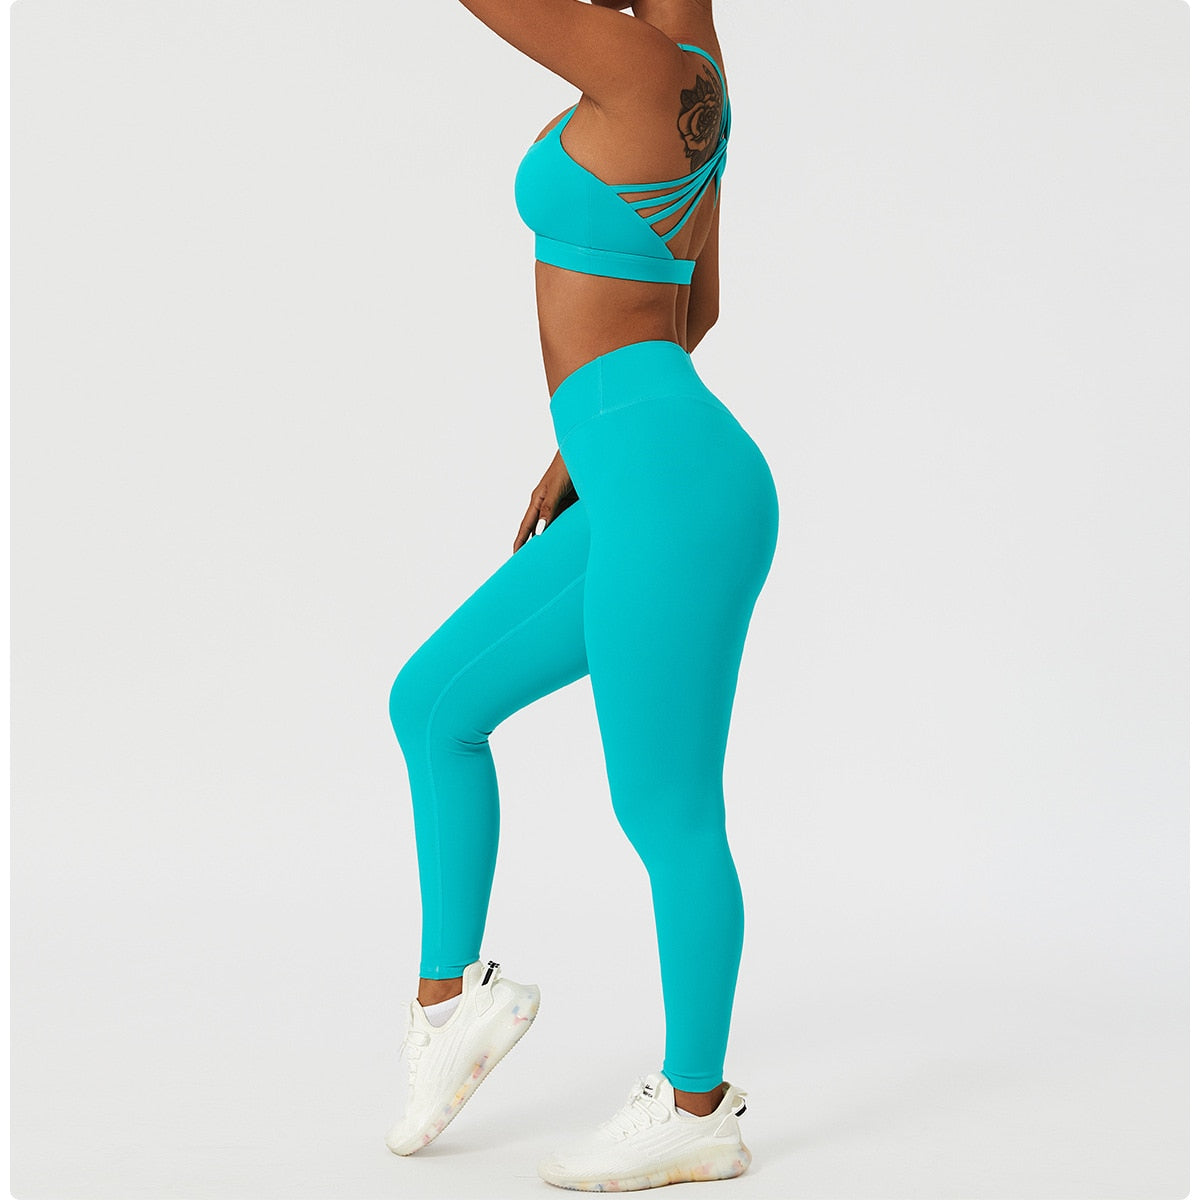 New Fitness Sports Bra for Women Push Up Beautiful Back Crisscross Strappy Running Gym Training Workout Yoga Underwear Crop Tops   59.99 EZYSELLA SHOP